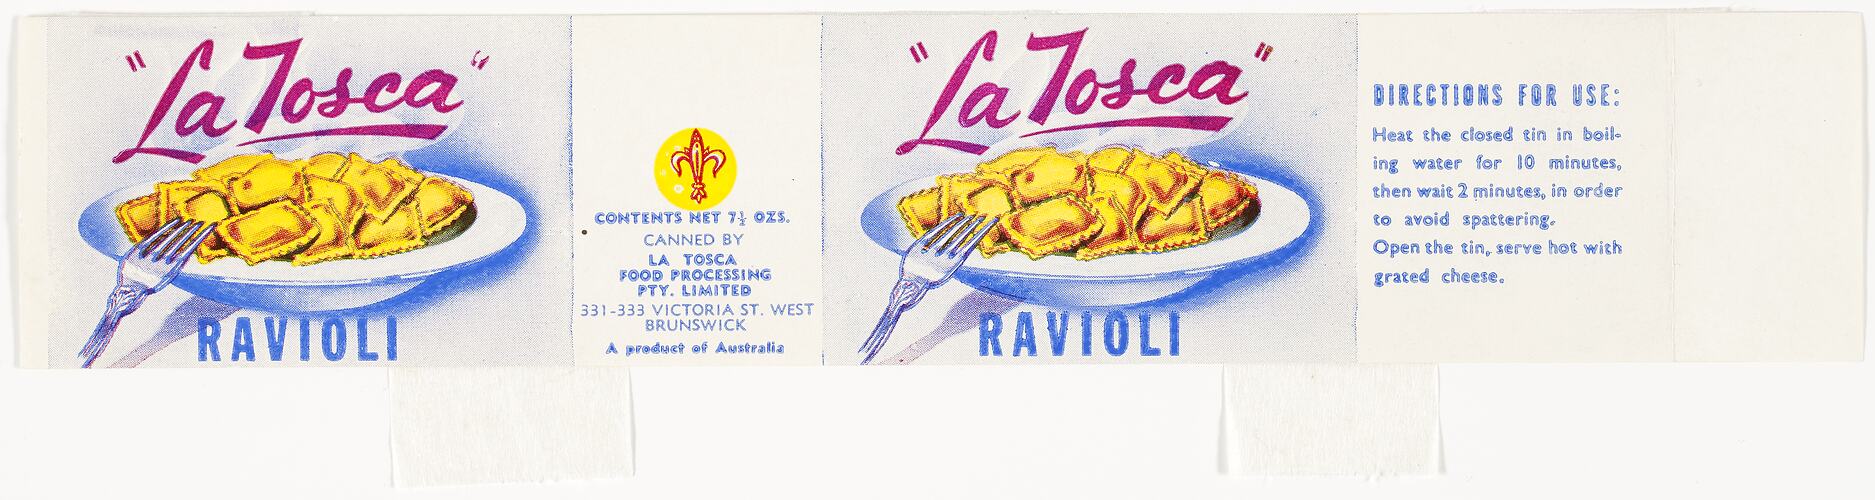 Food Label - La Tosca Ravioli, 1960s